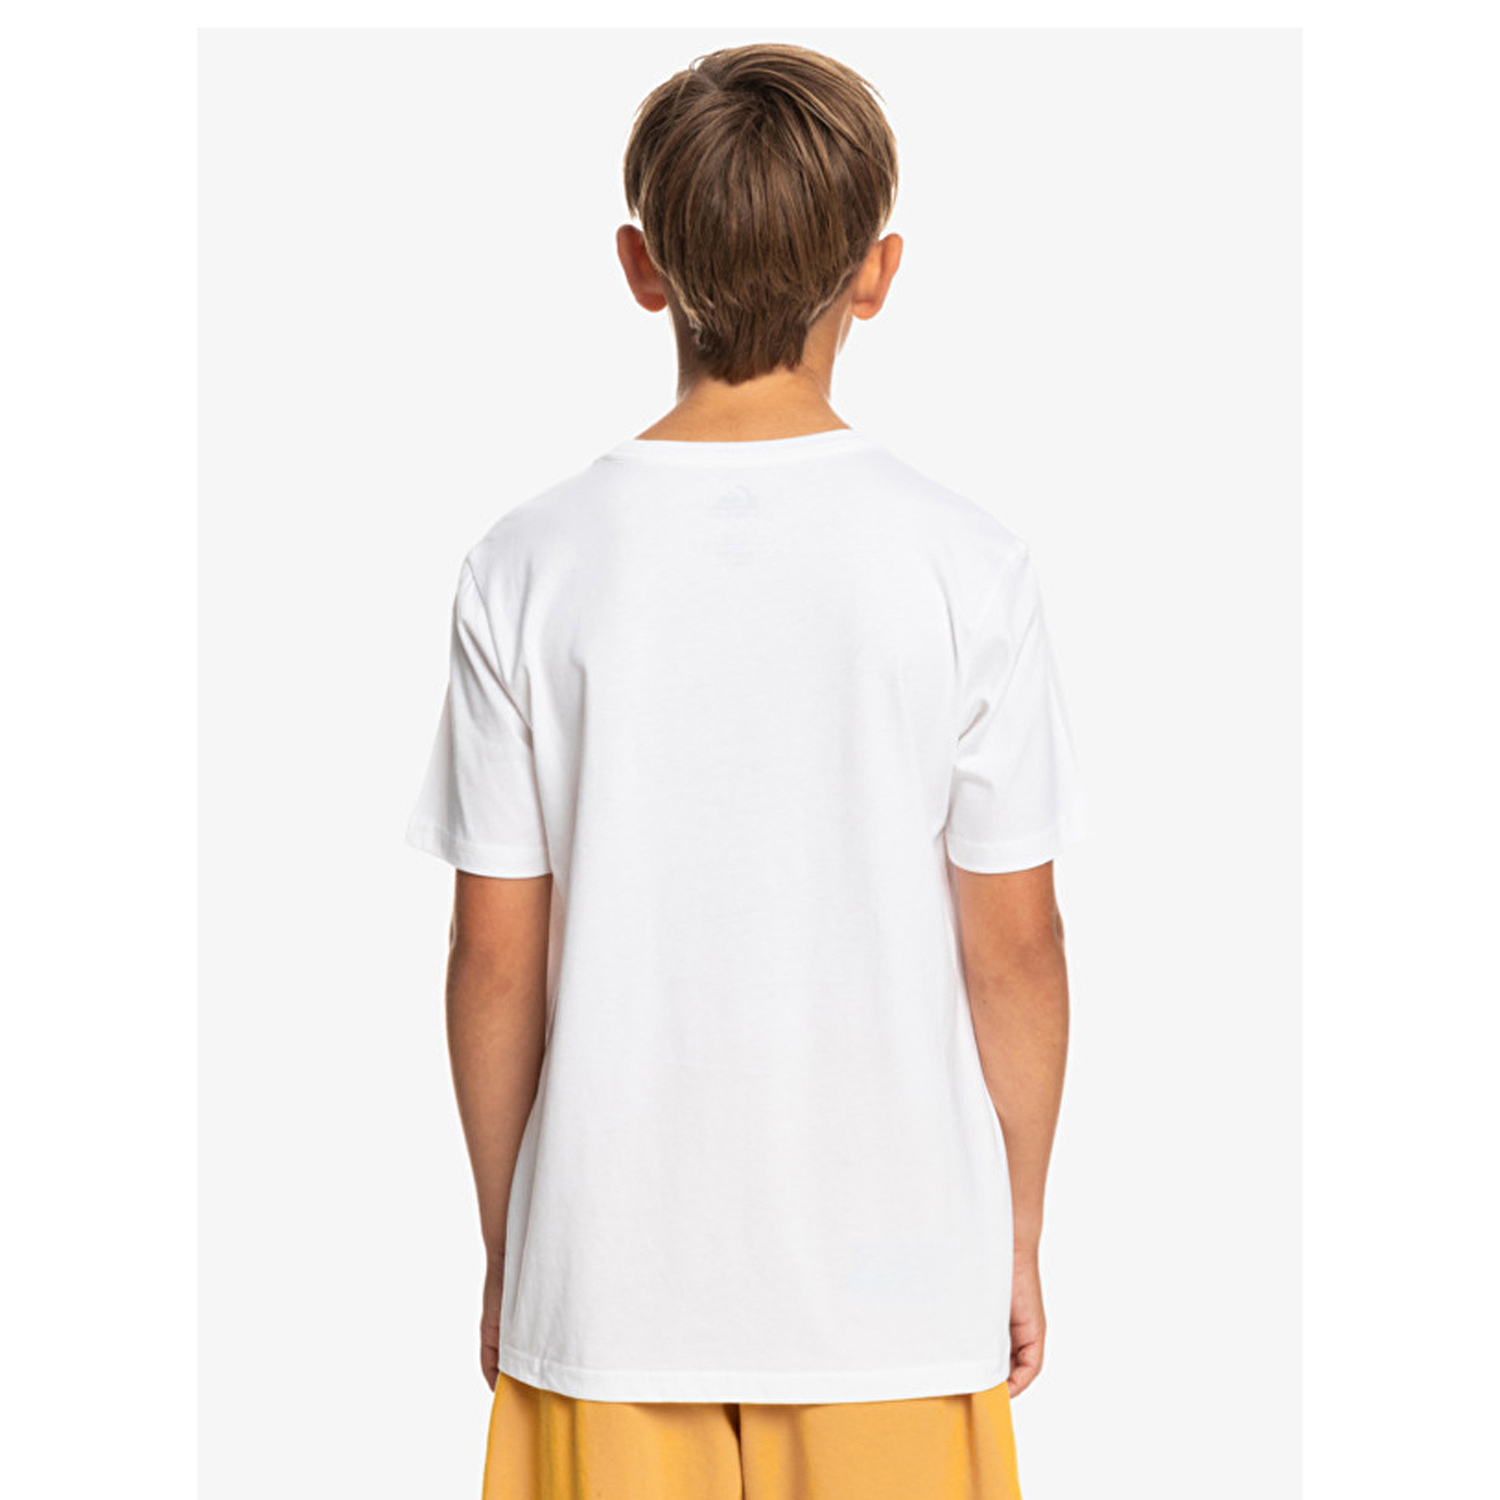 Quiksilver in Shapes Ss Çocuk Kısa Kollu T-Shirt